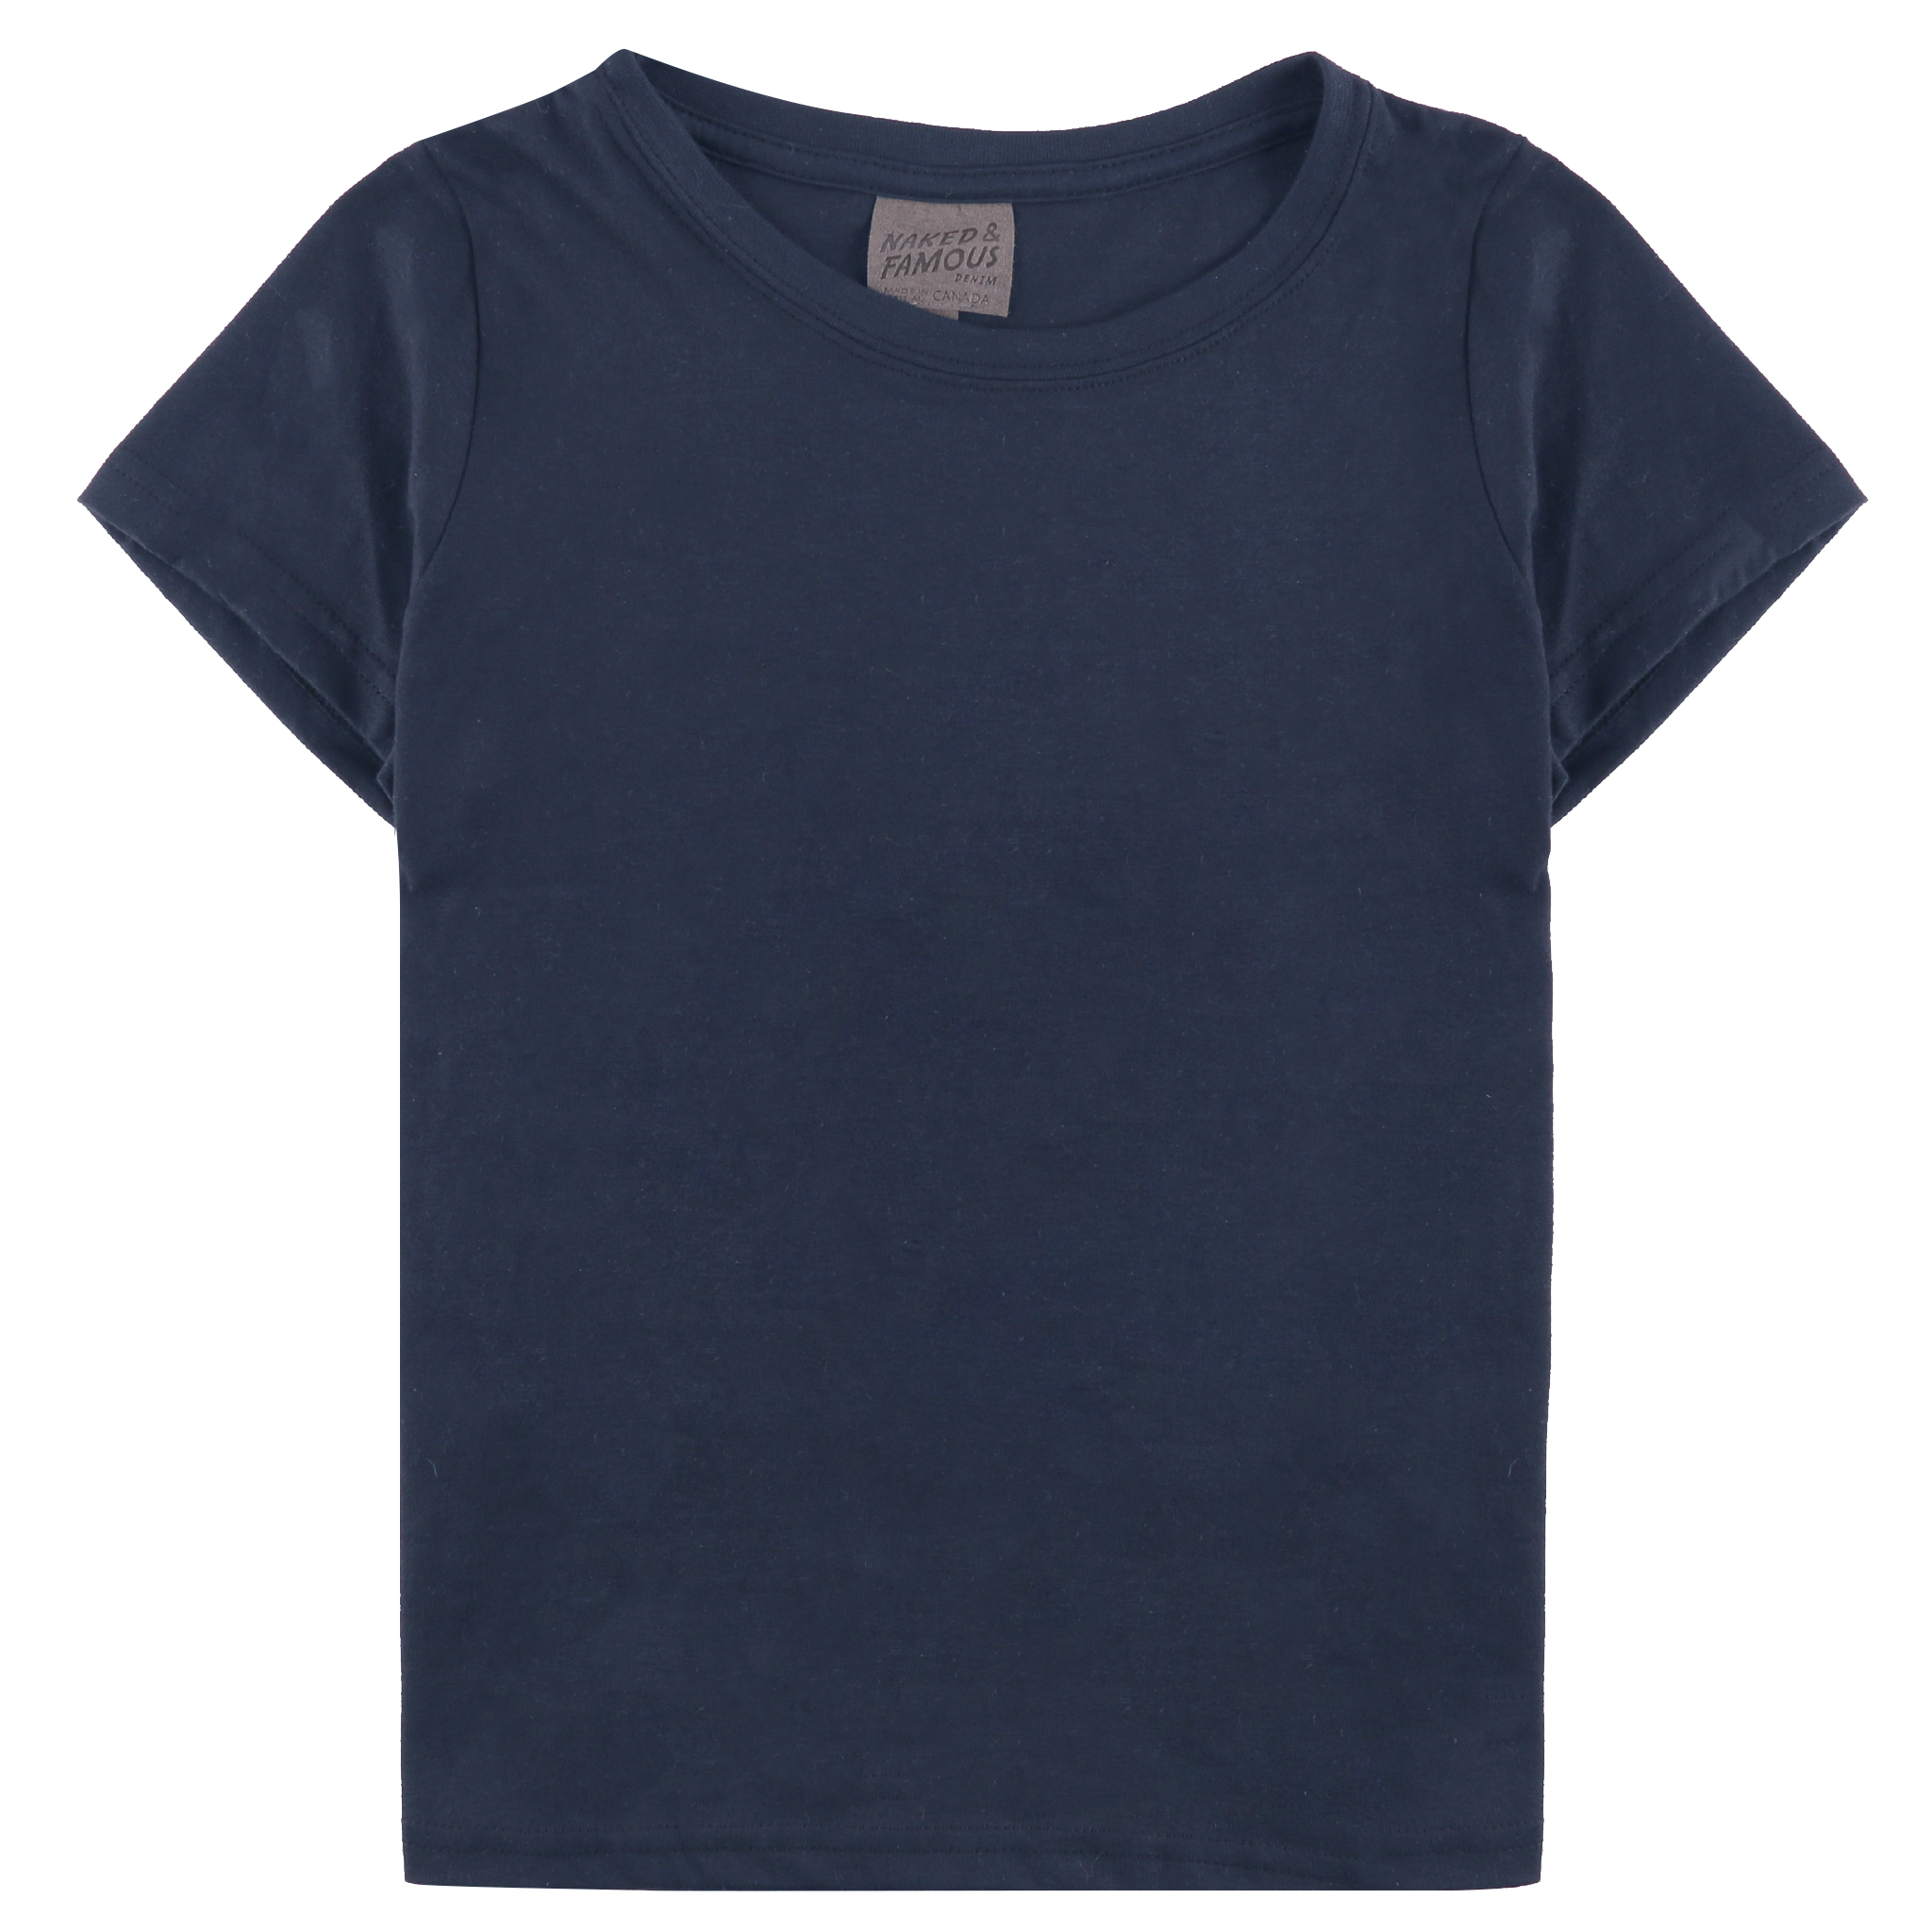  Women’s Circular Knit T-shirt Navy Flat View 